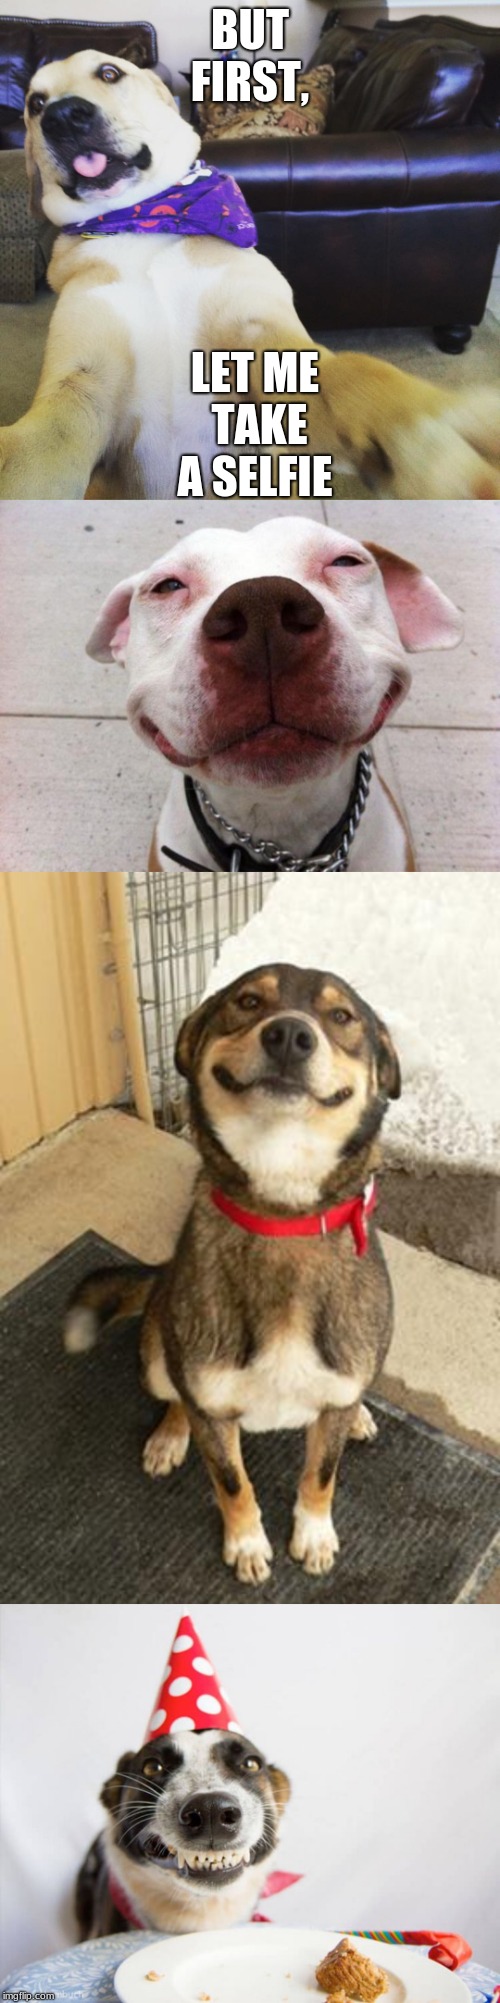 LET ME TAKE A SELFIE; BUT FIRST, | image tagged in dog smiling big,dog smile,funny dog meme,dog smile birthday | made w/ Imgflip meme maker